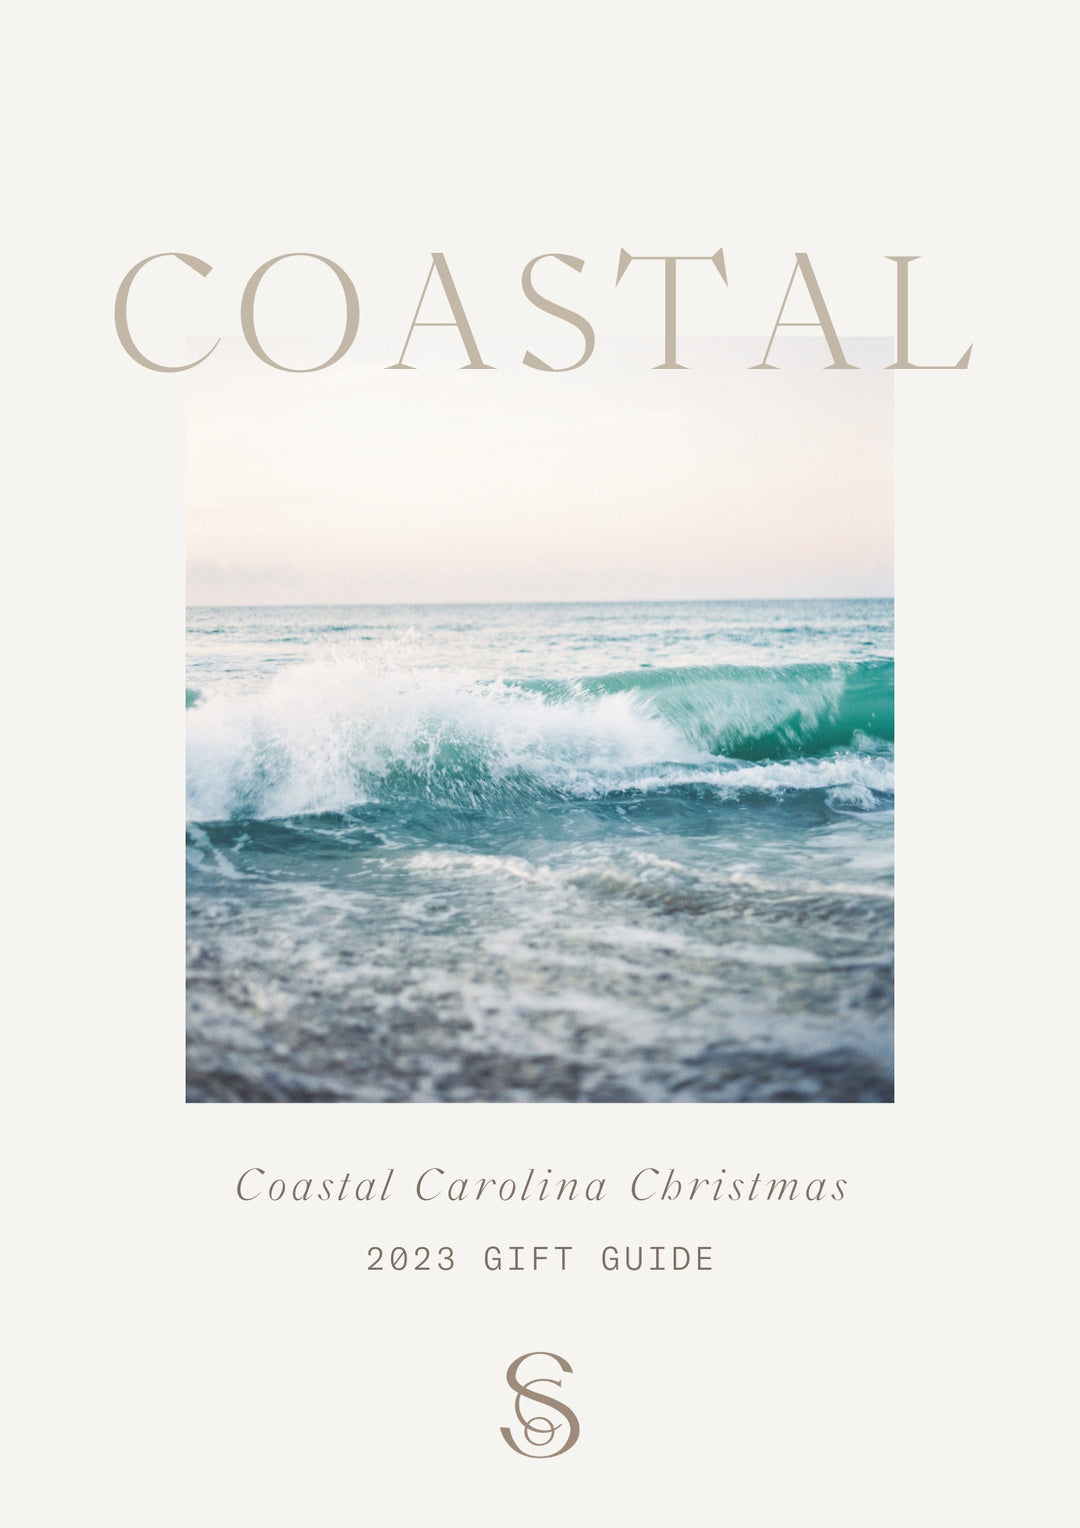 Coastal Carolina Christmas Gift Guide